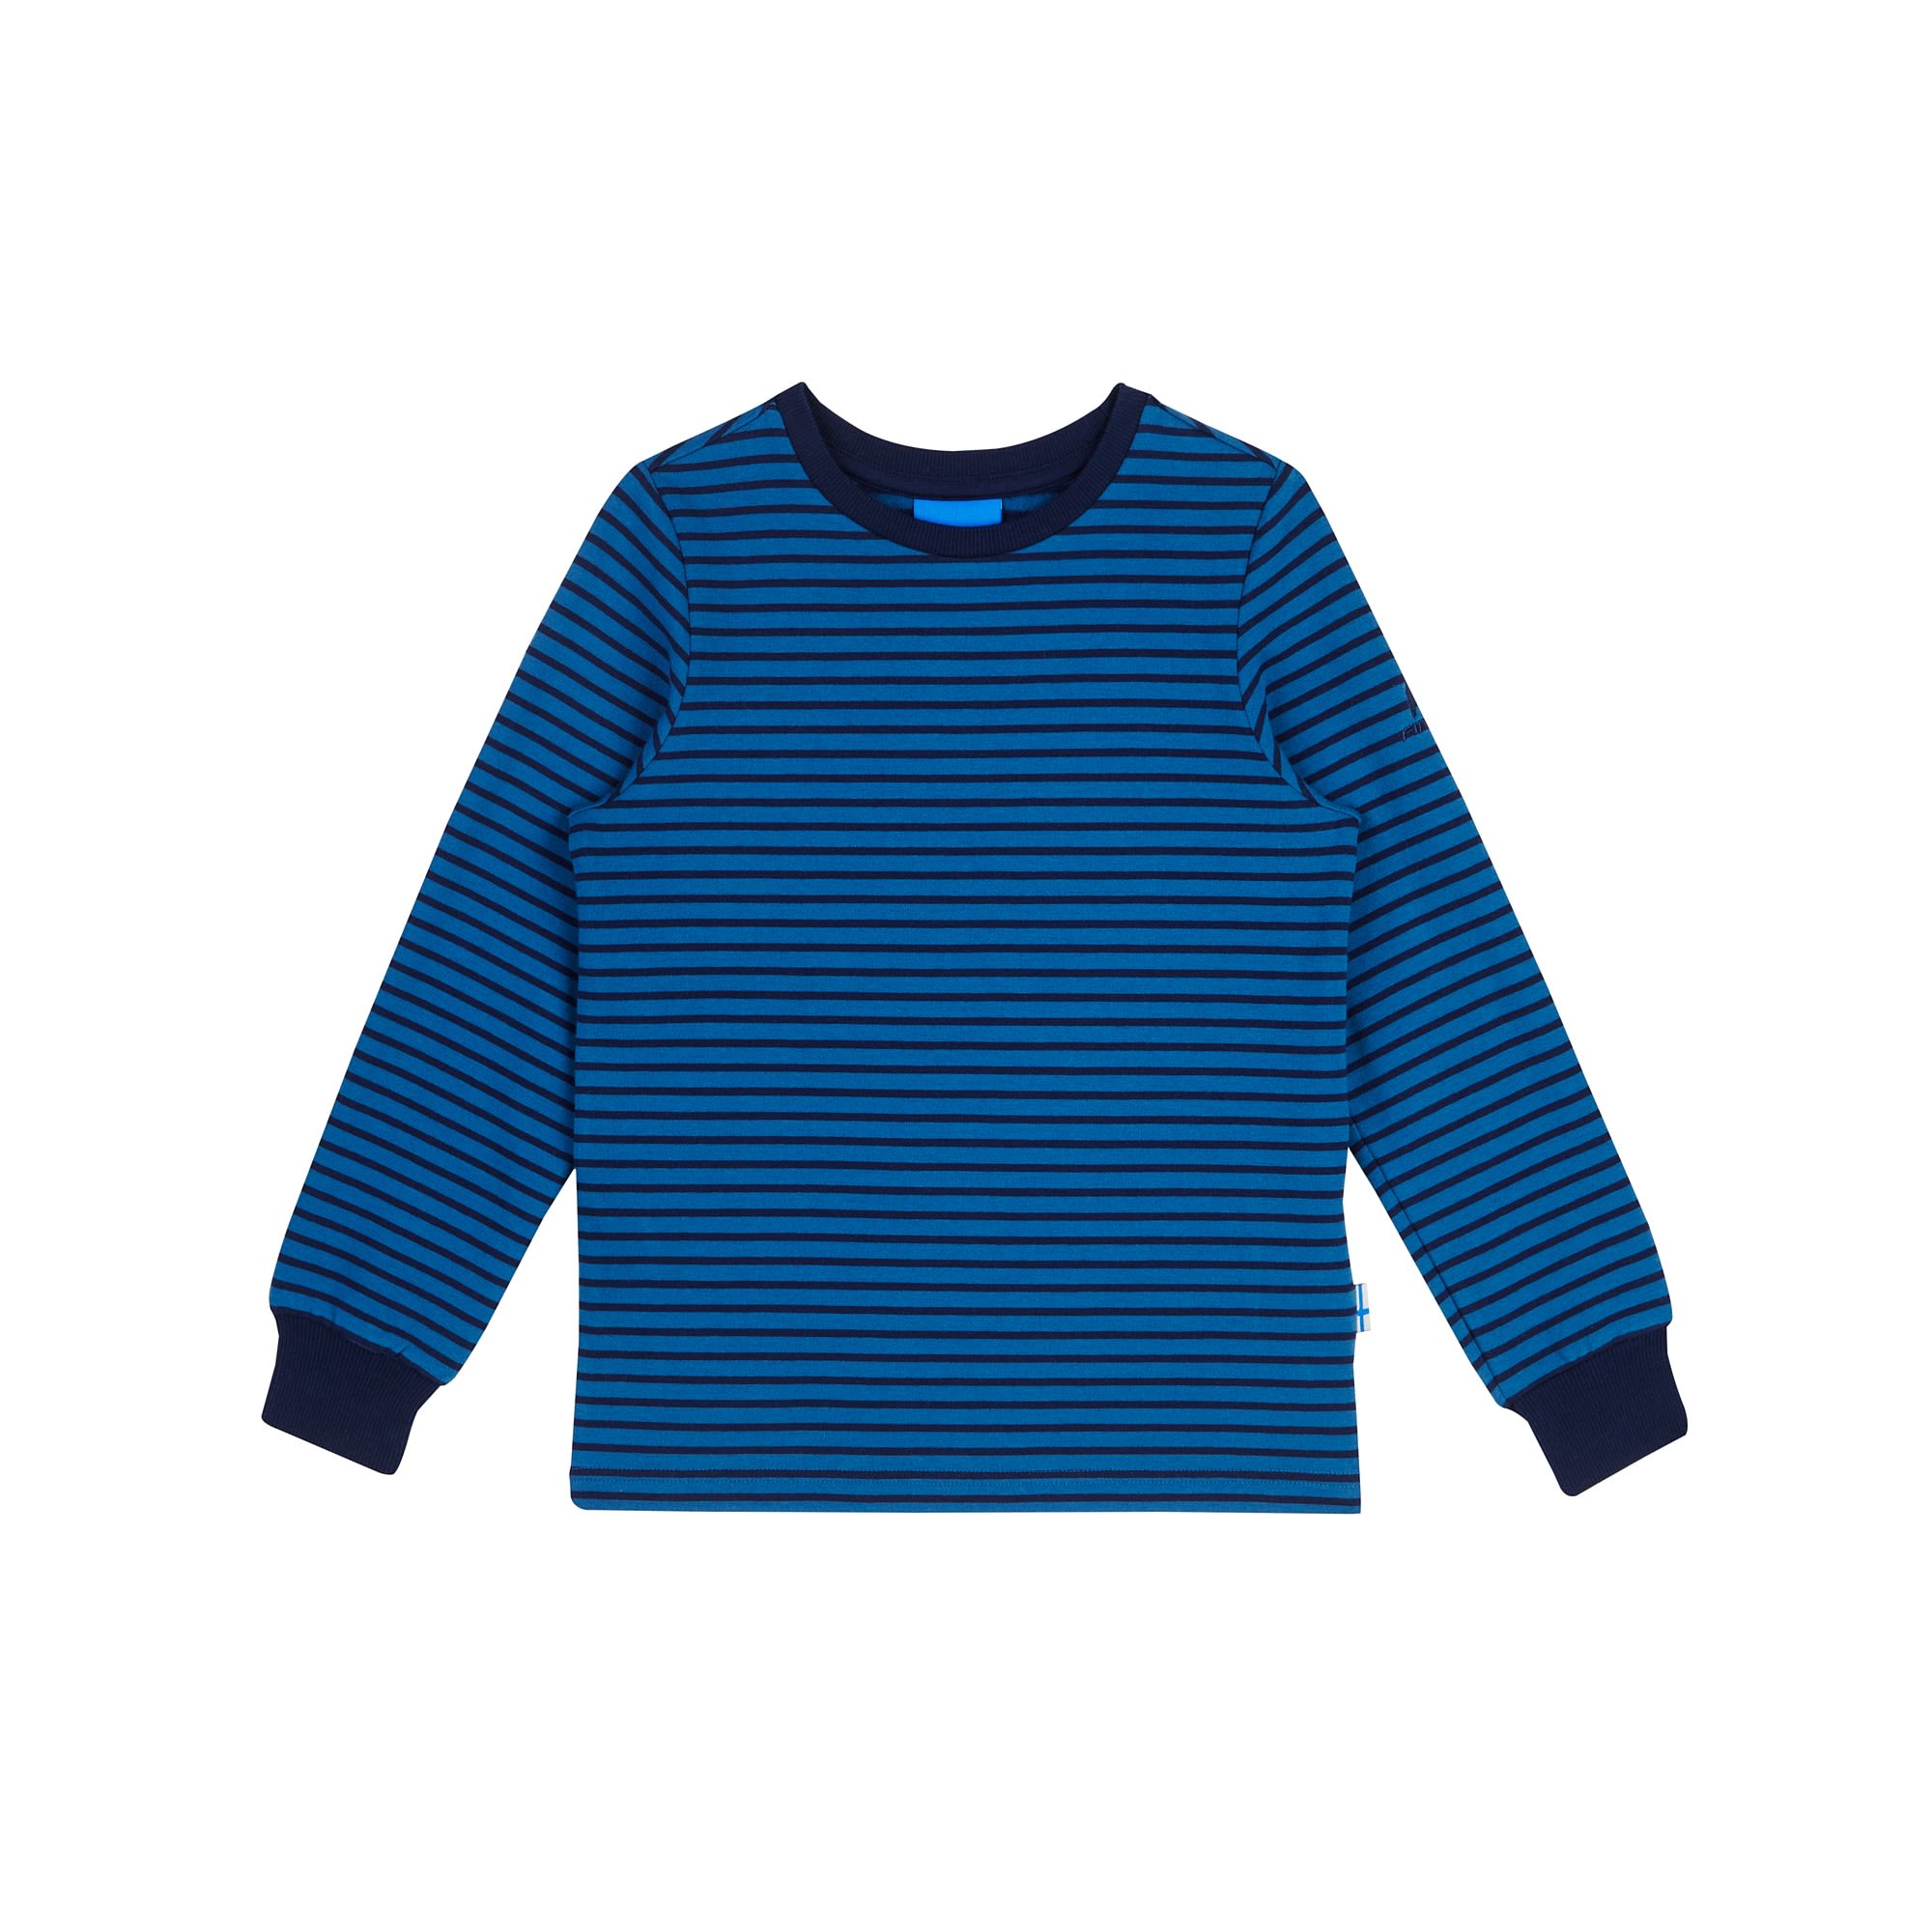 Finkid Rivi Gestreift - Blau- Langarm-Shirts- Grsse 80 - 90 - Farbe Real Teal - Navy